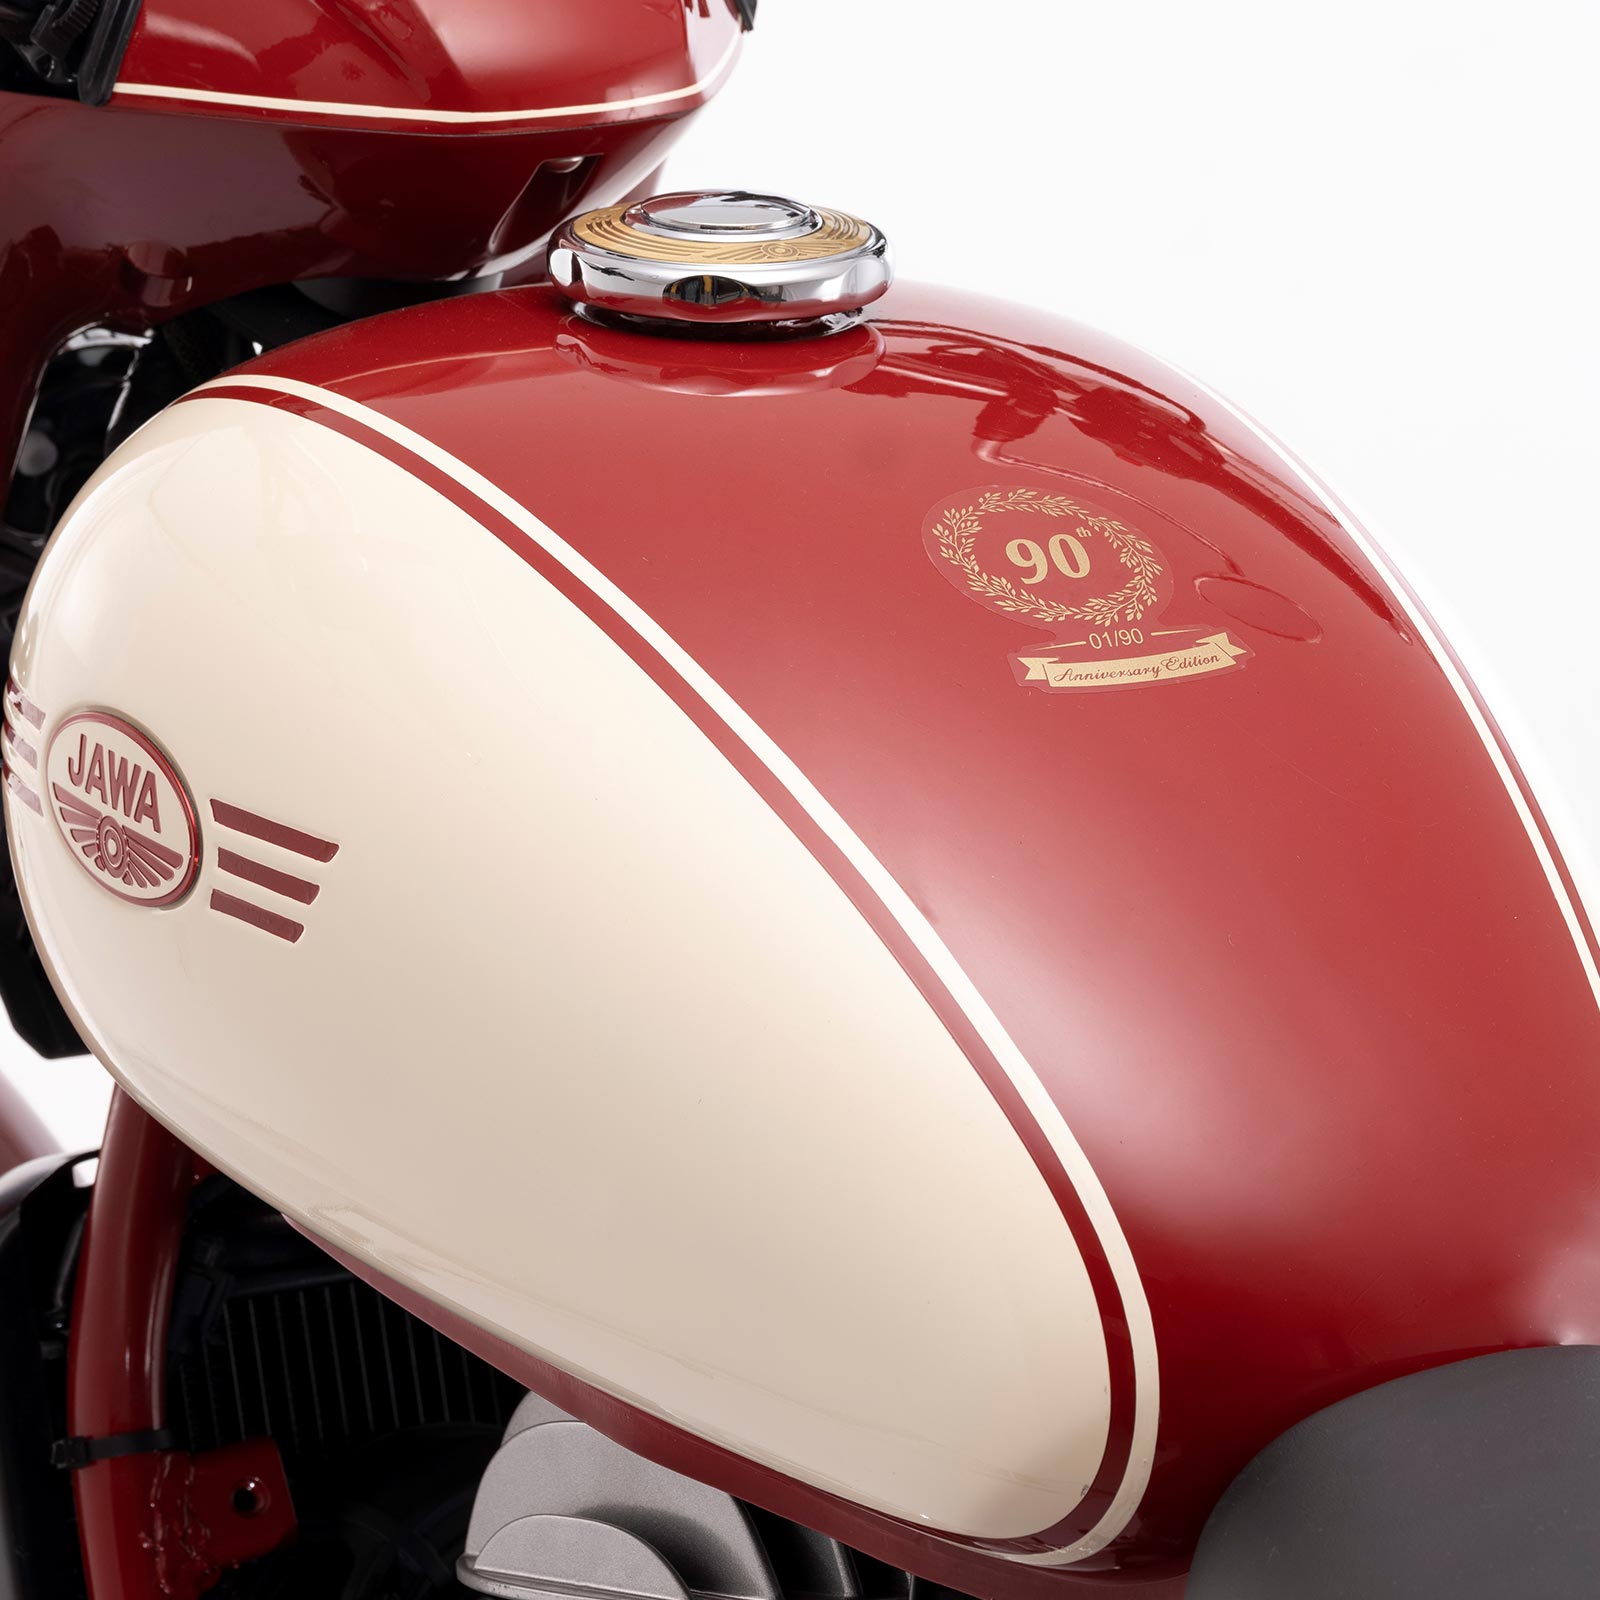 90th Anniversary Jawa Motorcycle